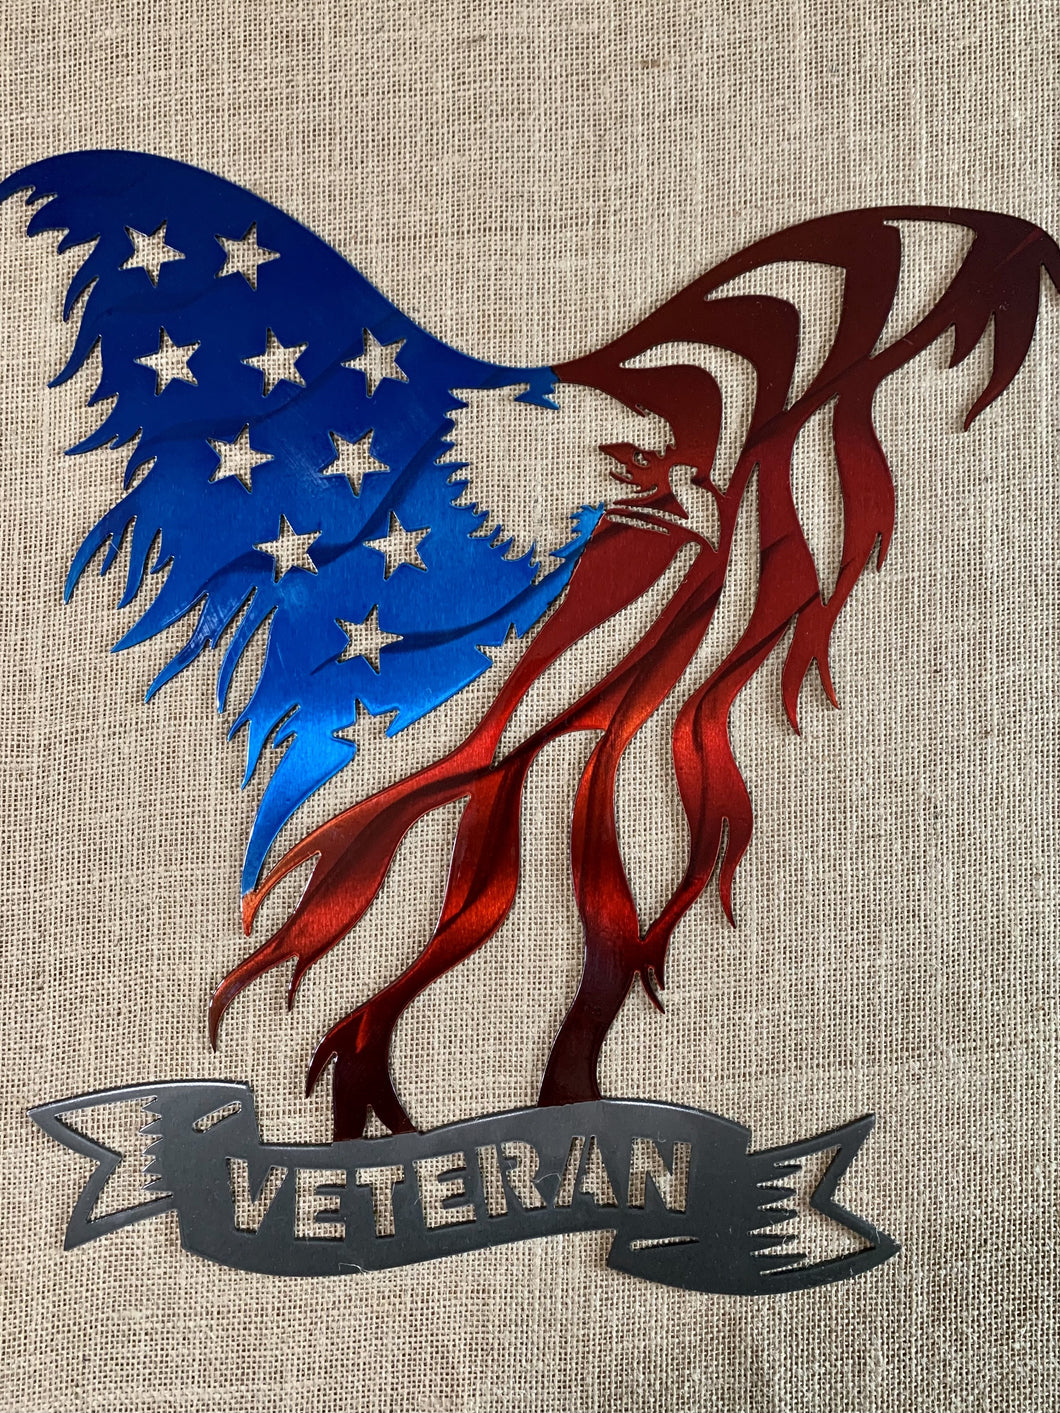 Veteran Eagle